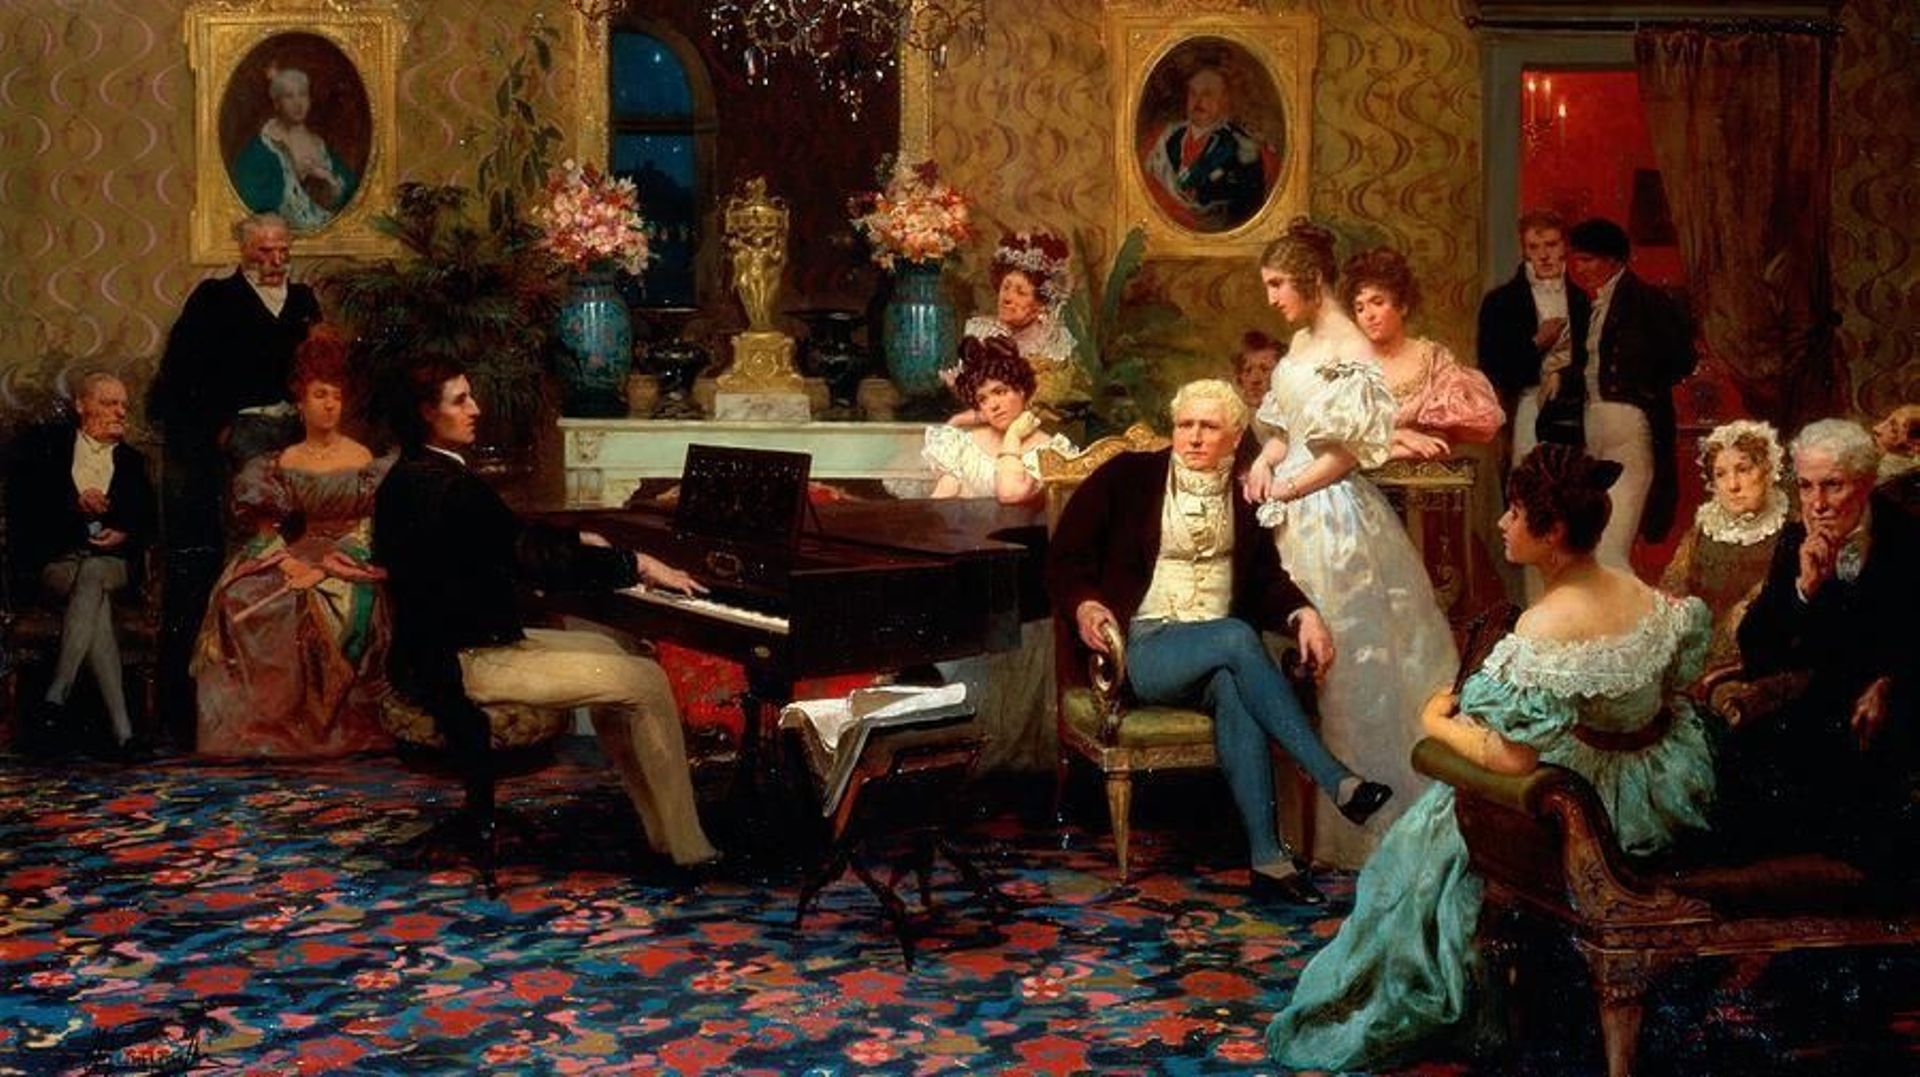 Concert chez les Radziwill en 1829 par Henryk Siemiradzki